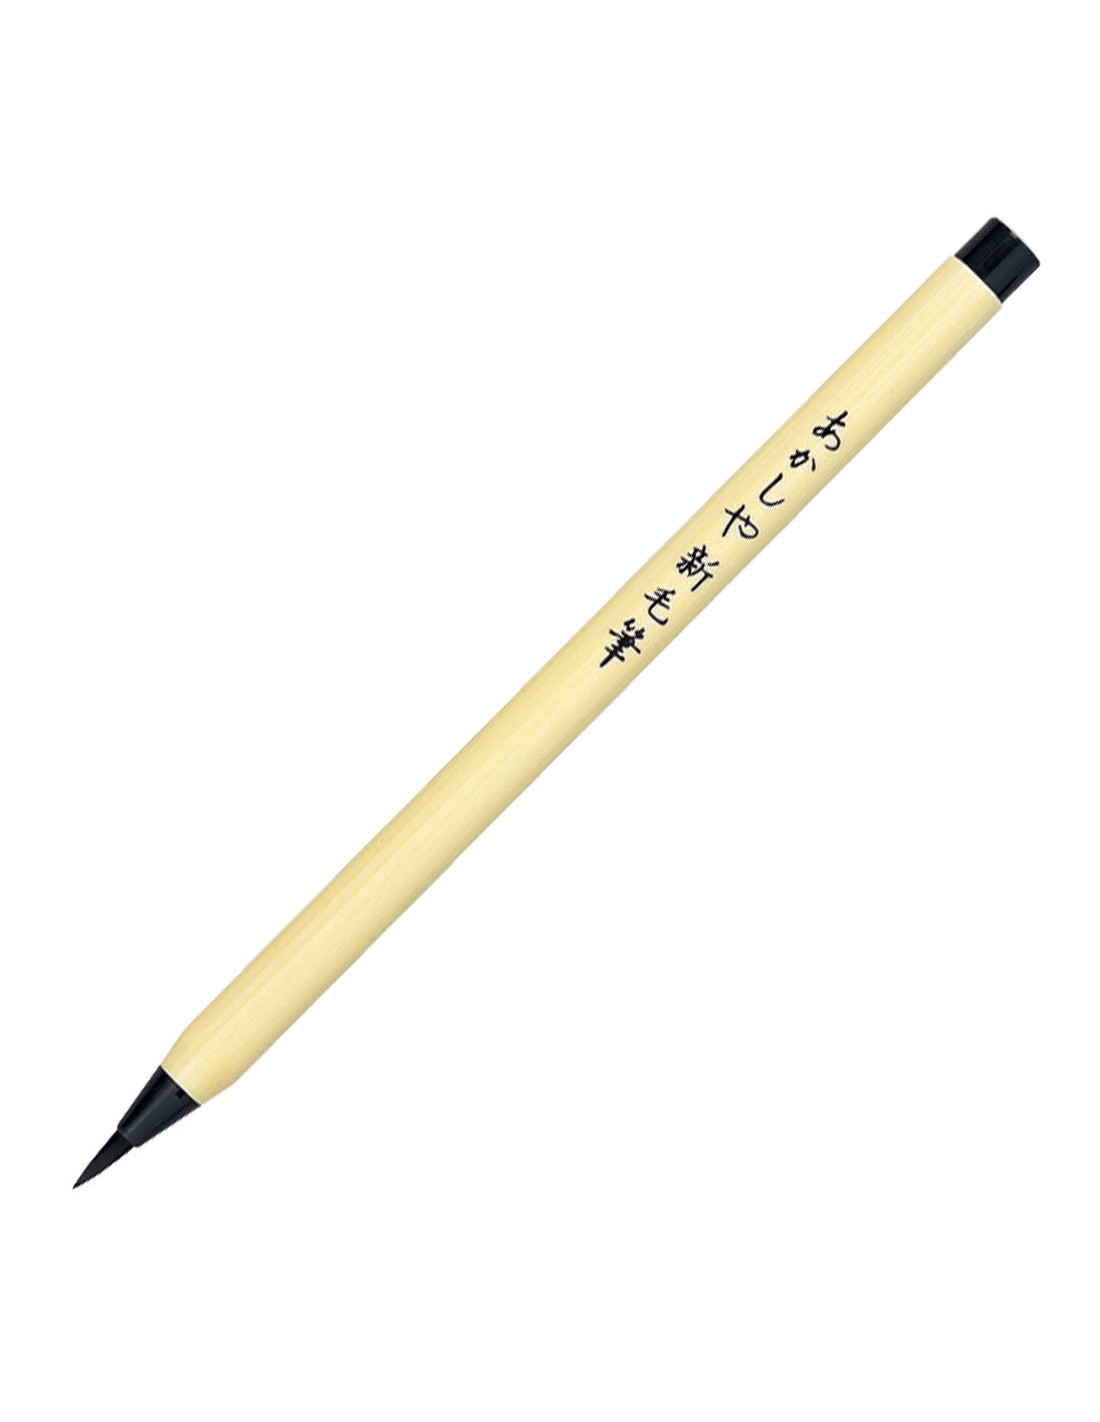 Akashiya Shinmouhitsu Brush Pen - Black